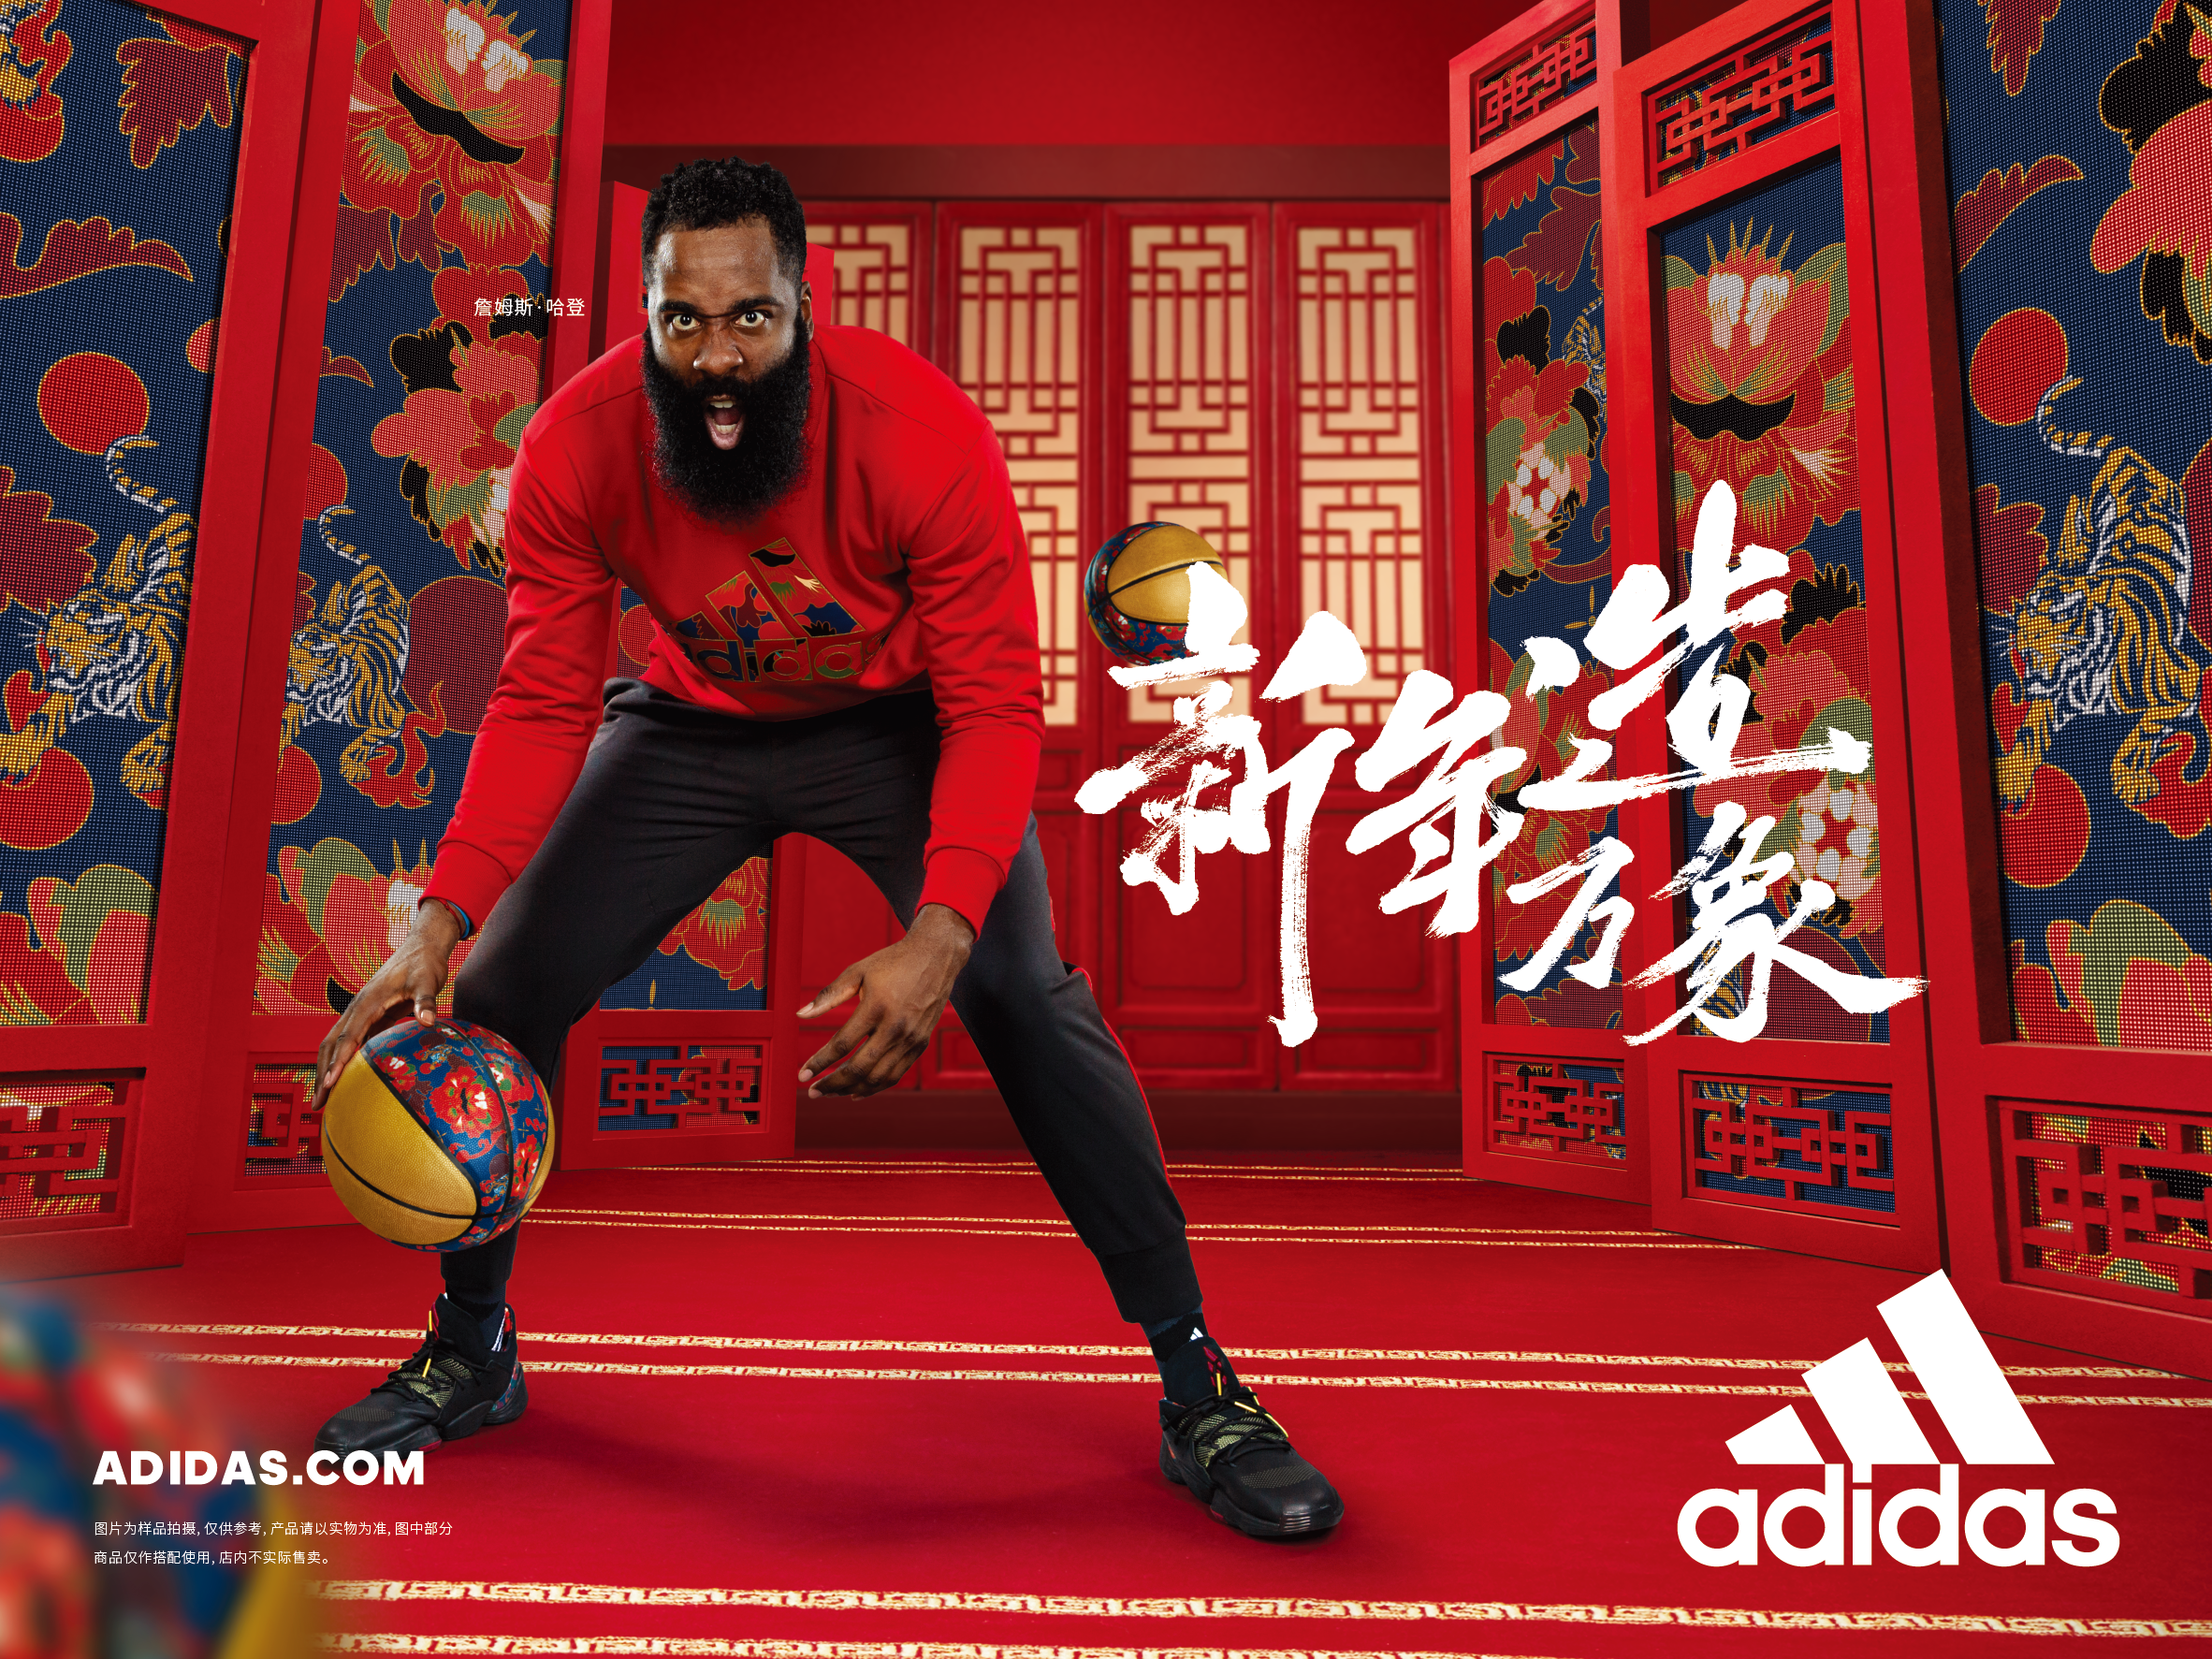 Adidas - Chinese New Year :: Behance